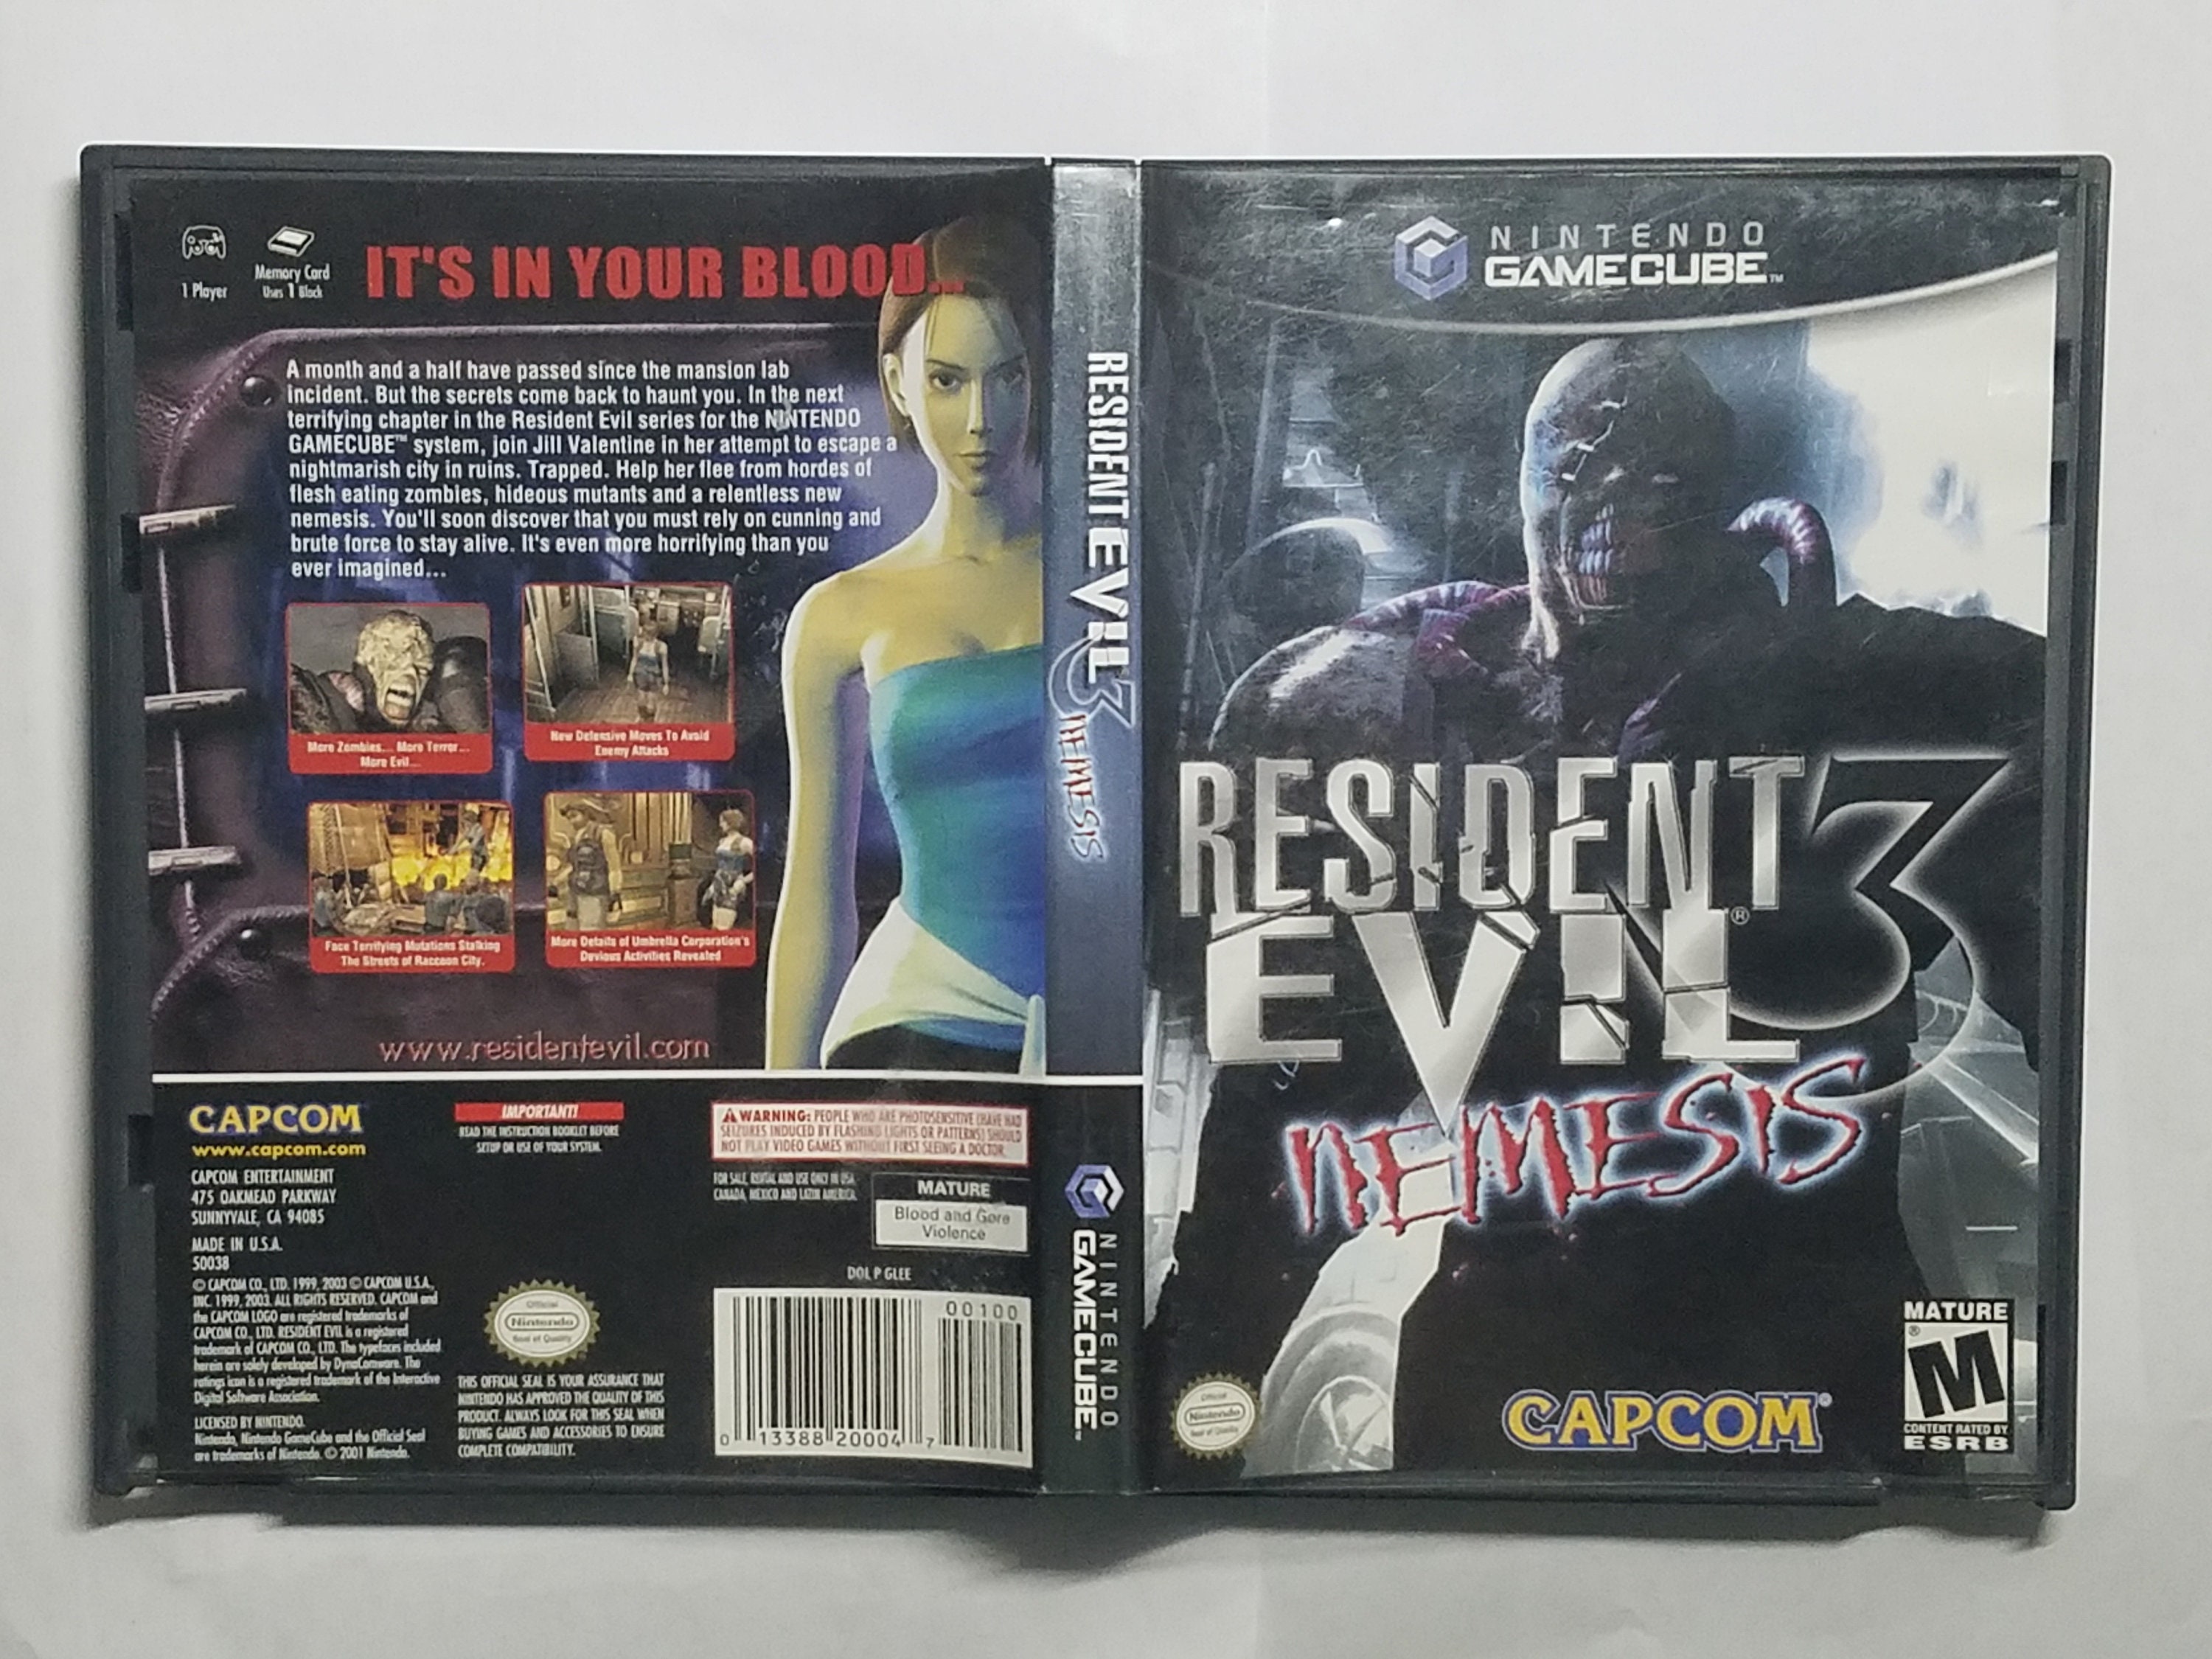 Resident Evil 4 - Gamecube - CIB [Complete]